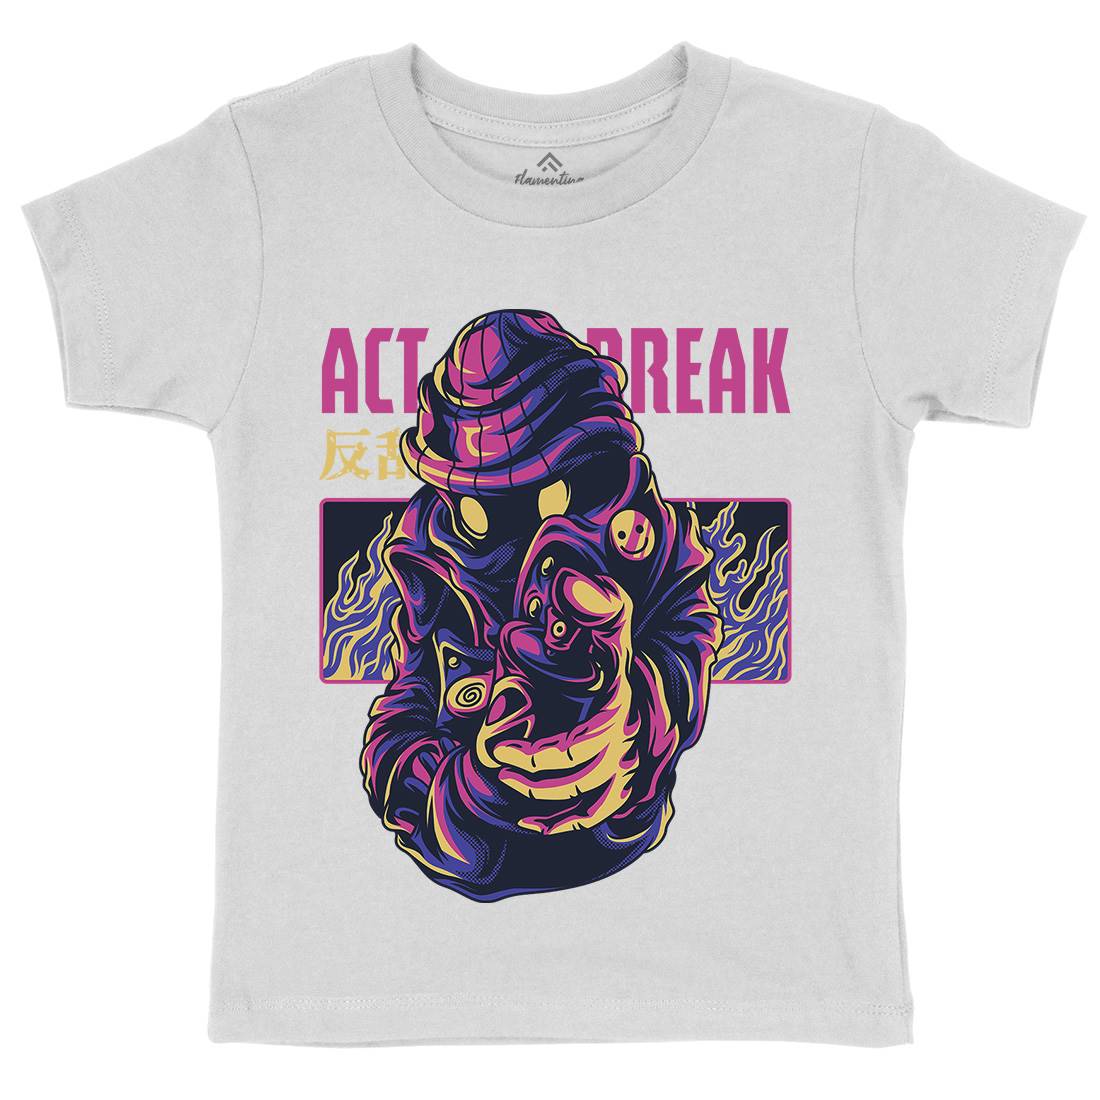 Act Break Kids Organic Crew Neck T-Shirt Graffiti D700